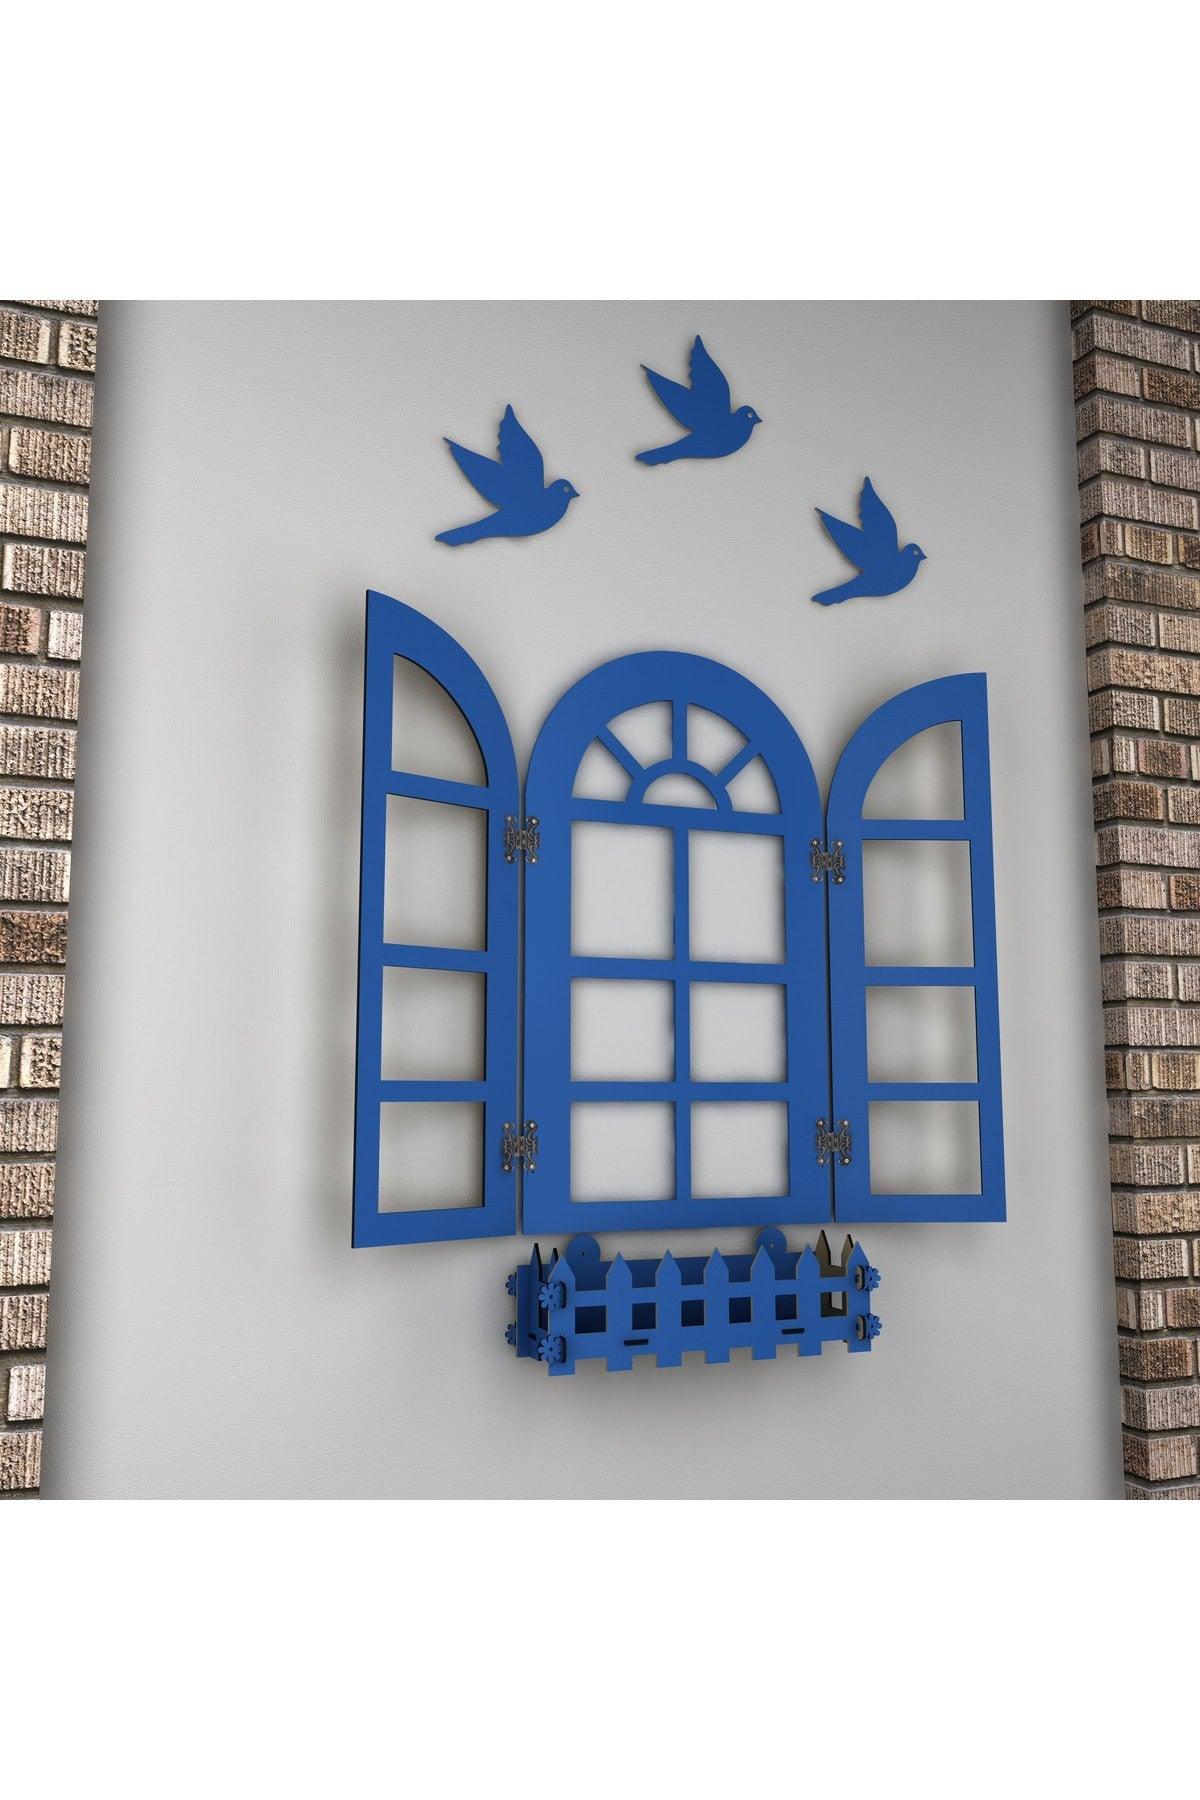 Blue Decorative Wood(3MM MDF) Decor Blinds Window Home Gift (60CM X 60CM) Blue Shutter Window - Swordslife